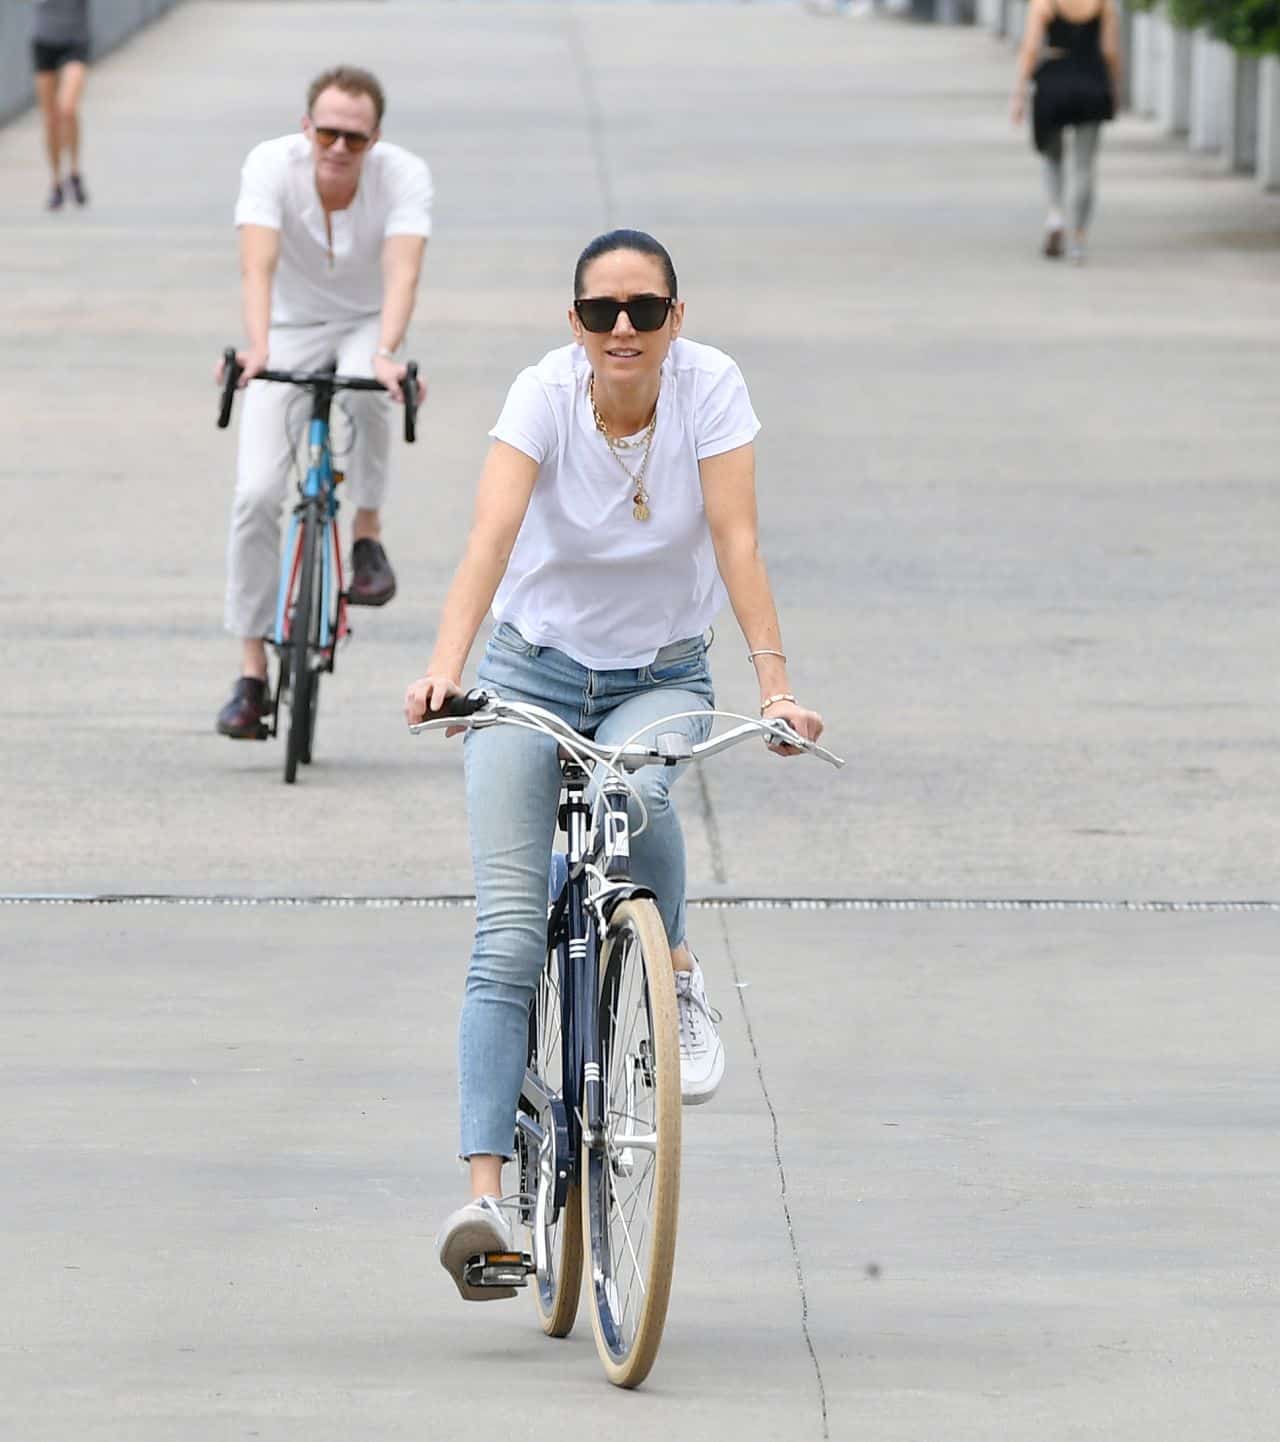 Jennifer Connelly and Paul Bettany's Joyful Bike Ride Date in NYC